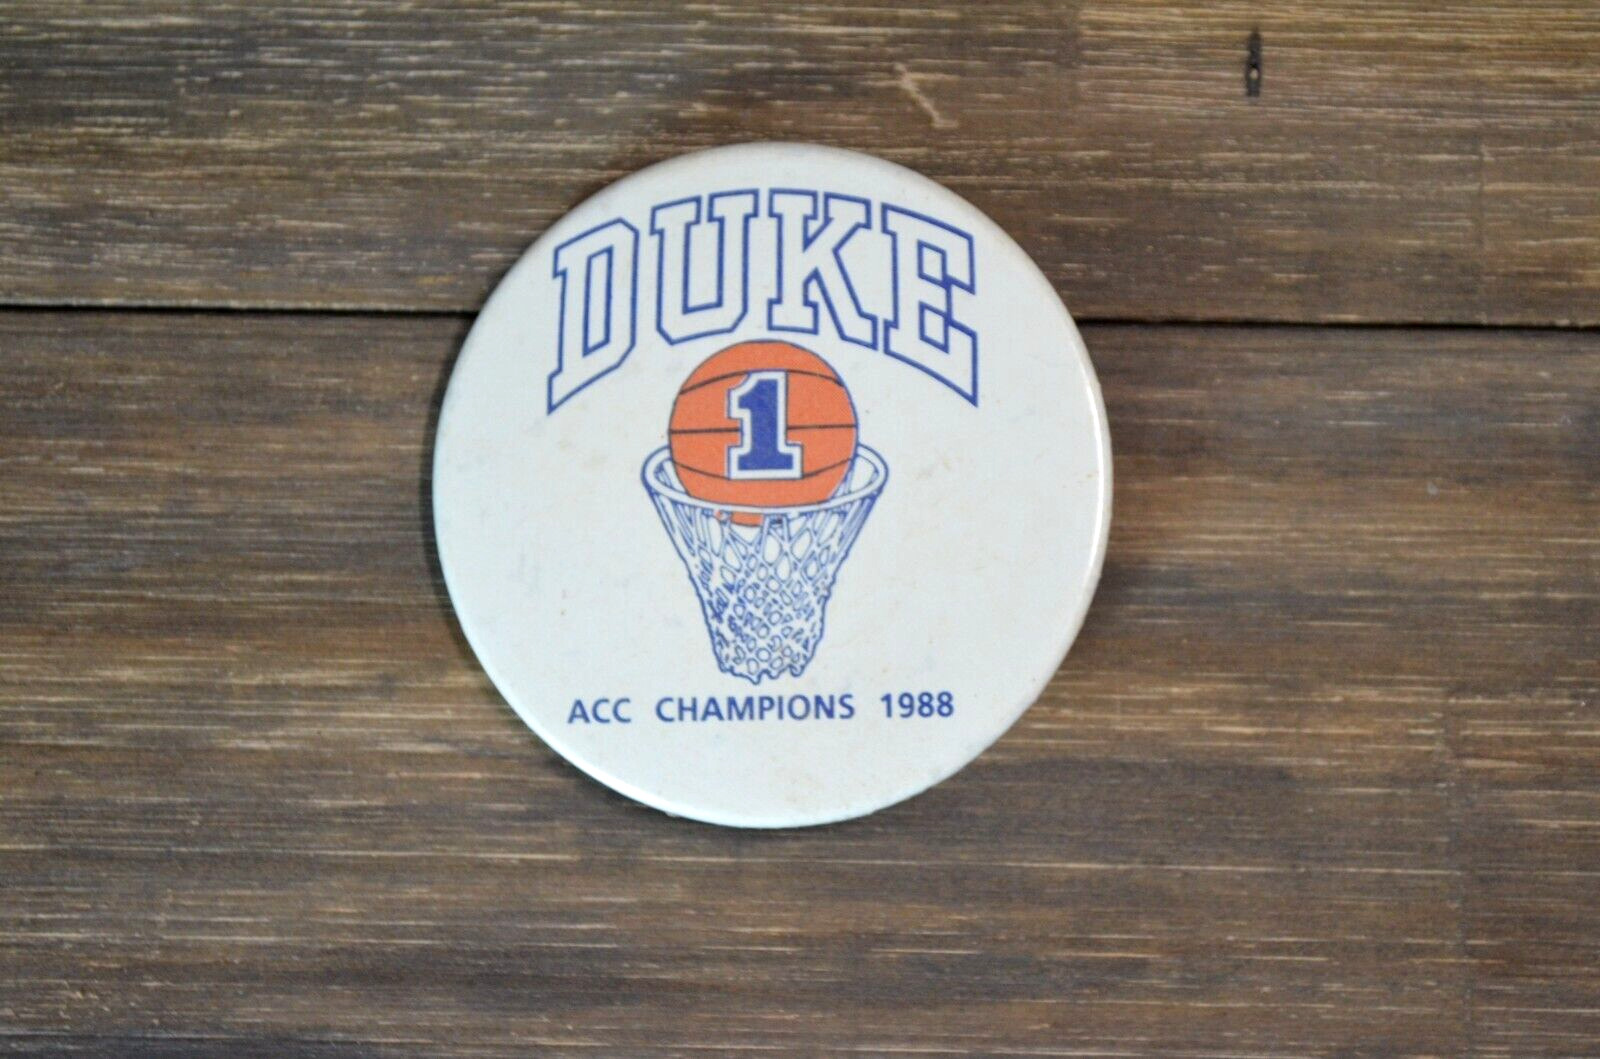 1988 Duke ACC Champions Button Pin Basketball #1 NCAA University Sports Vintage